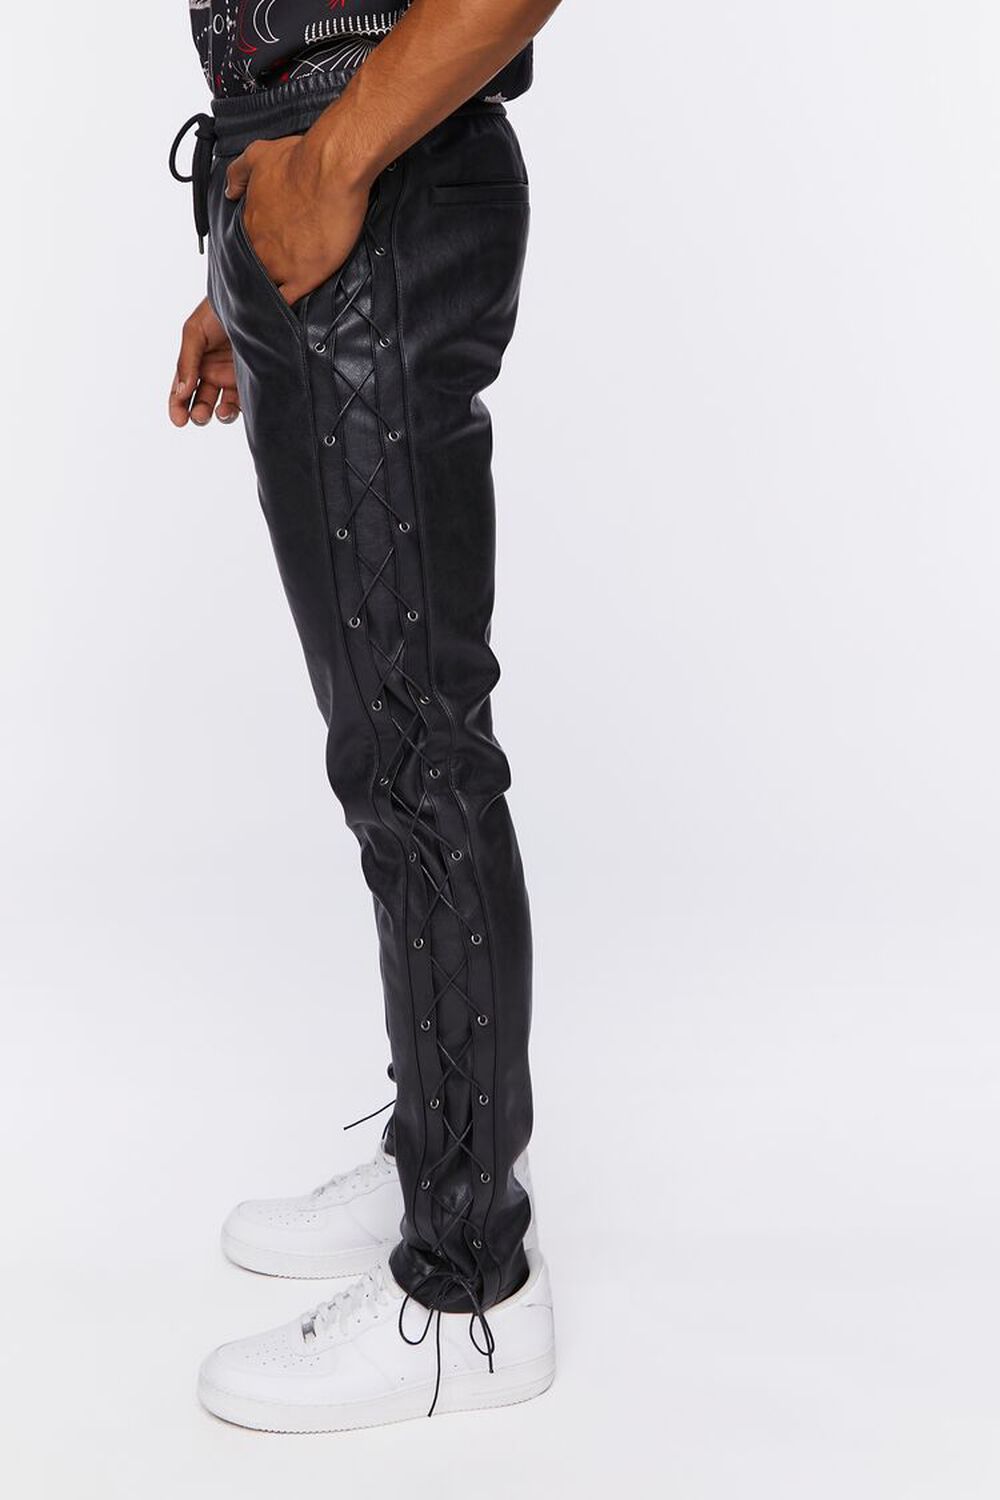 BLACK Faux Leather Side Lace-Up Pants, image 3